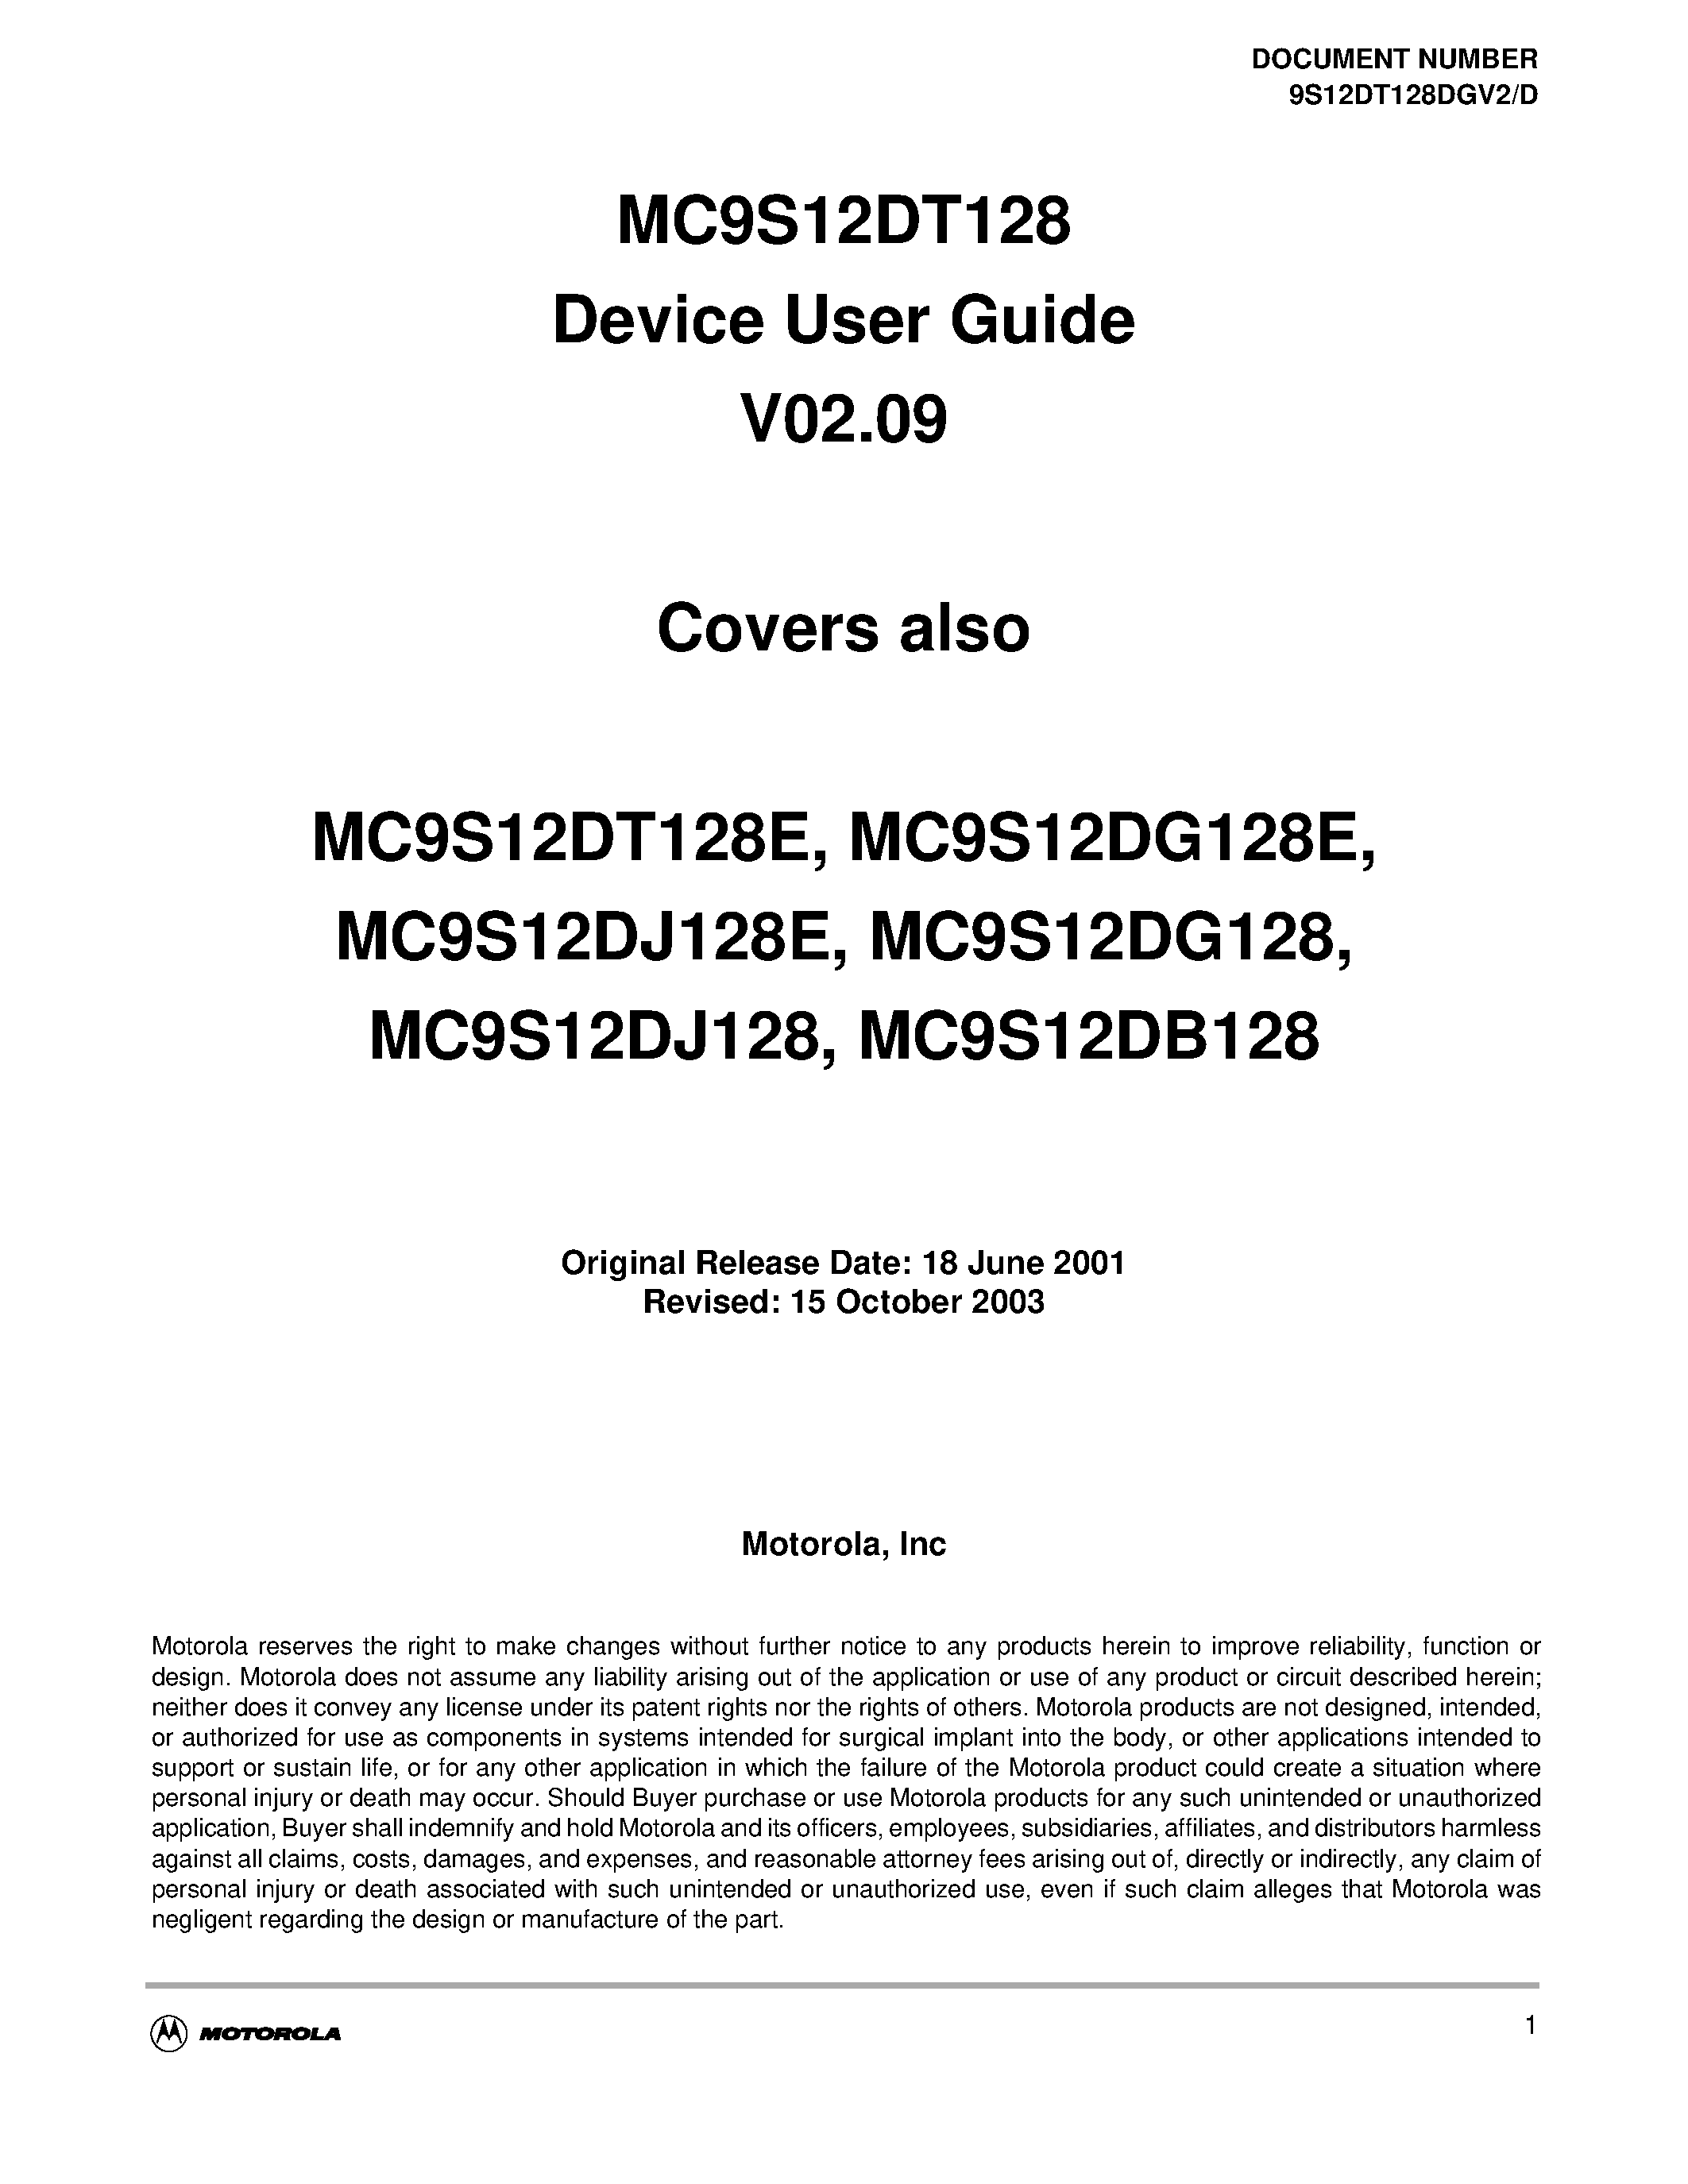 Даташит S12BFV1D - MC9S12DT128 Device User Guide V02.09 страница 1